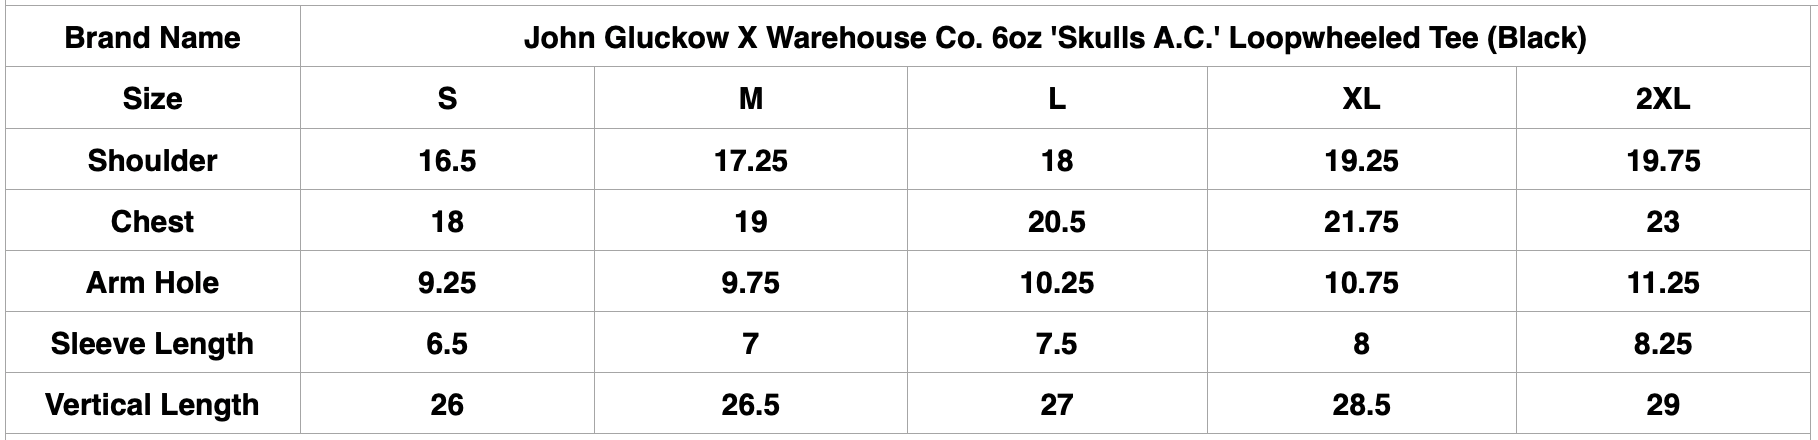 John Gluckow X Warehouse Co. 6oz 'Skulls A.C.' Loopwheeled Tee (Black)